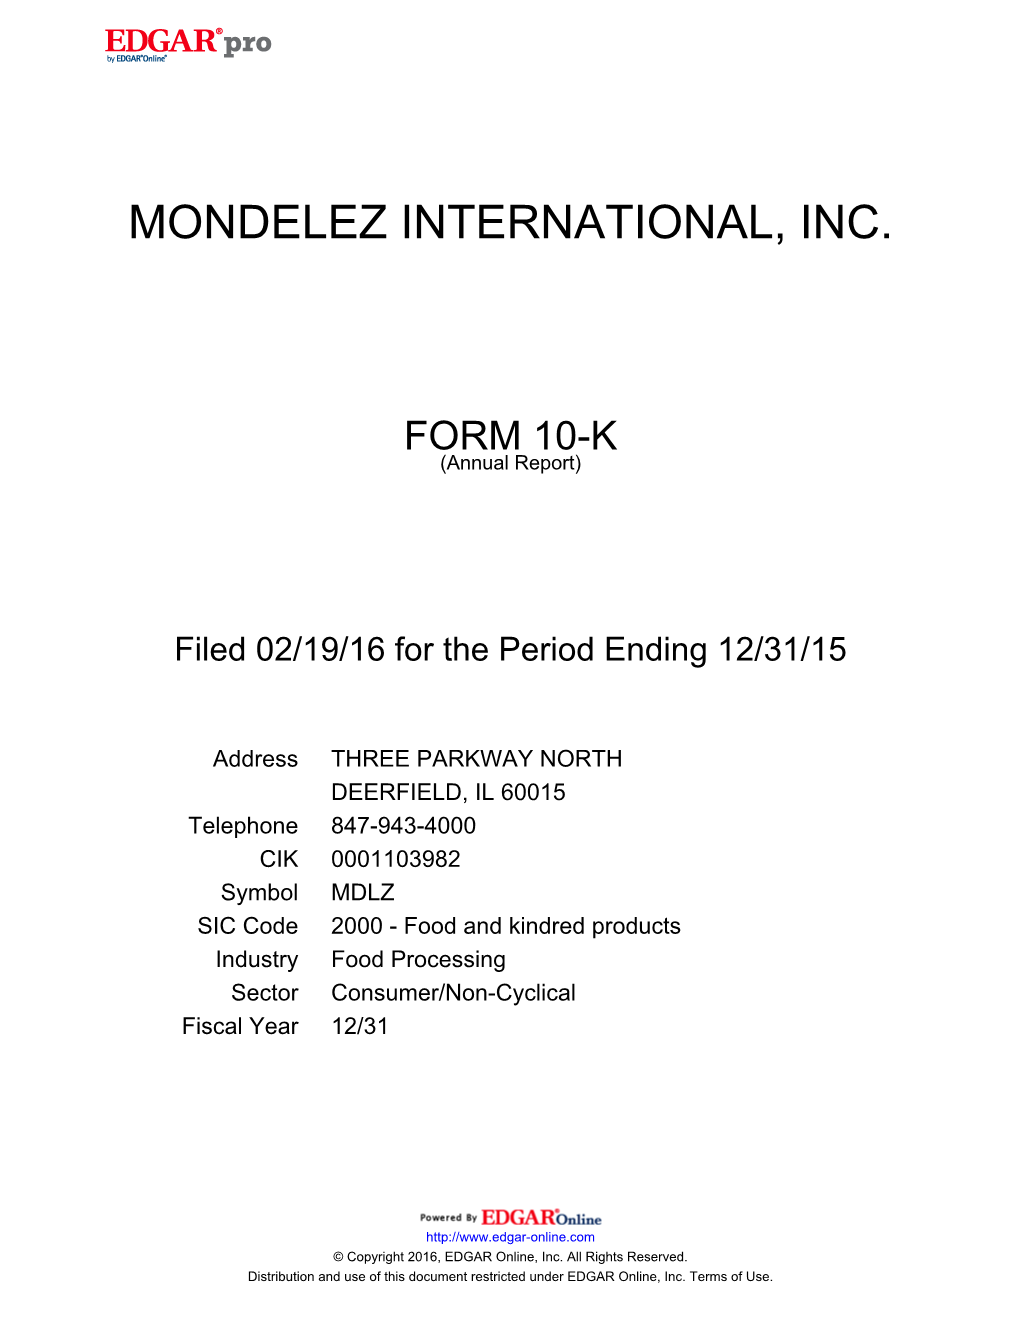 Mondelez International, Inc